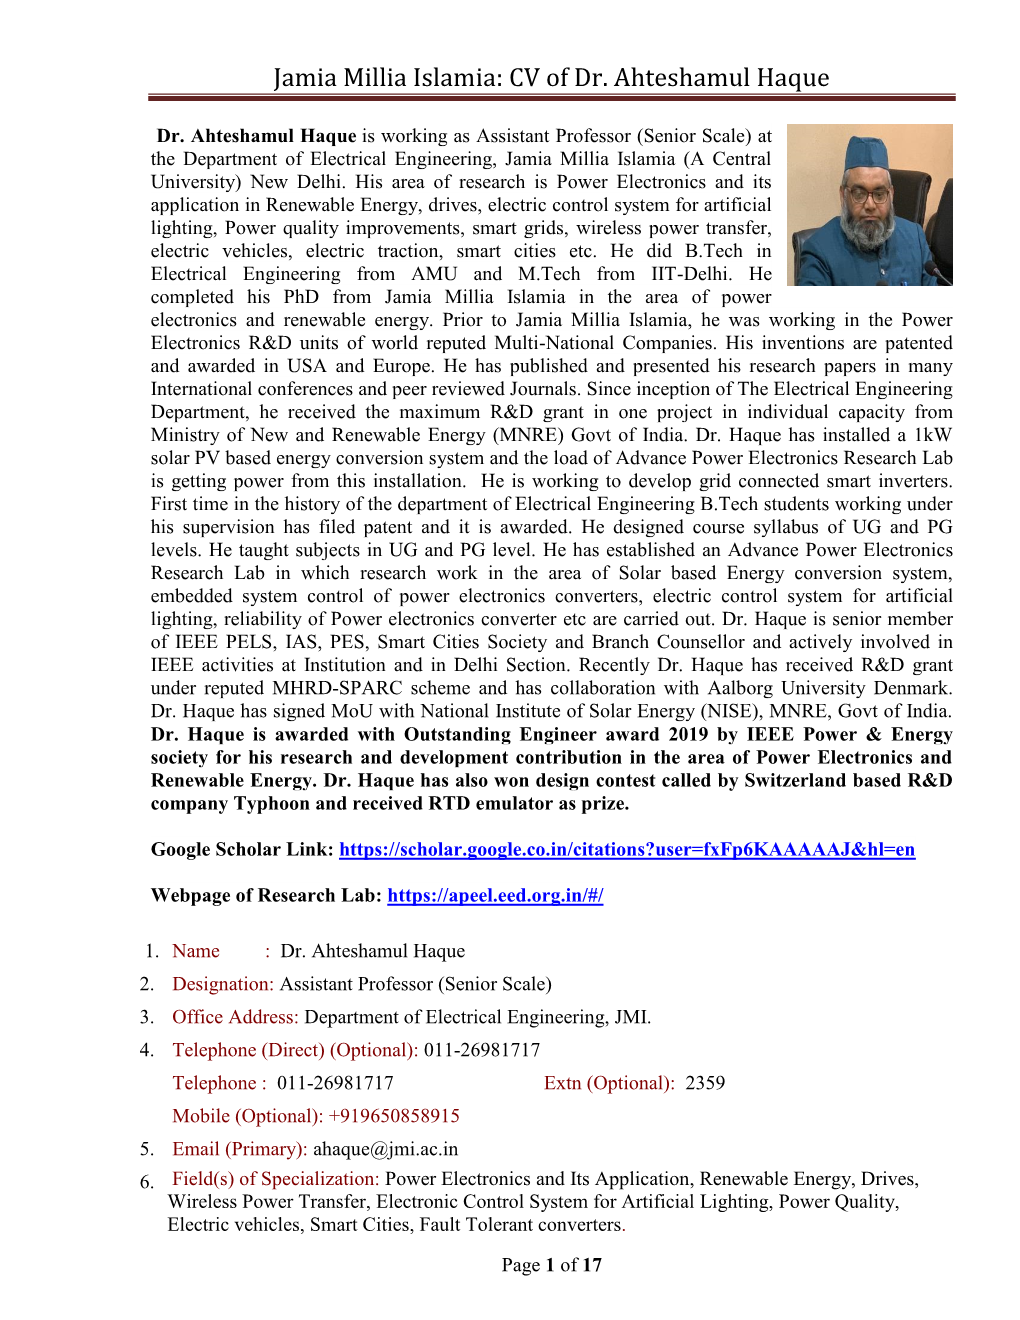 CV of Dr. Ahteshamul Haque